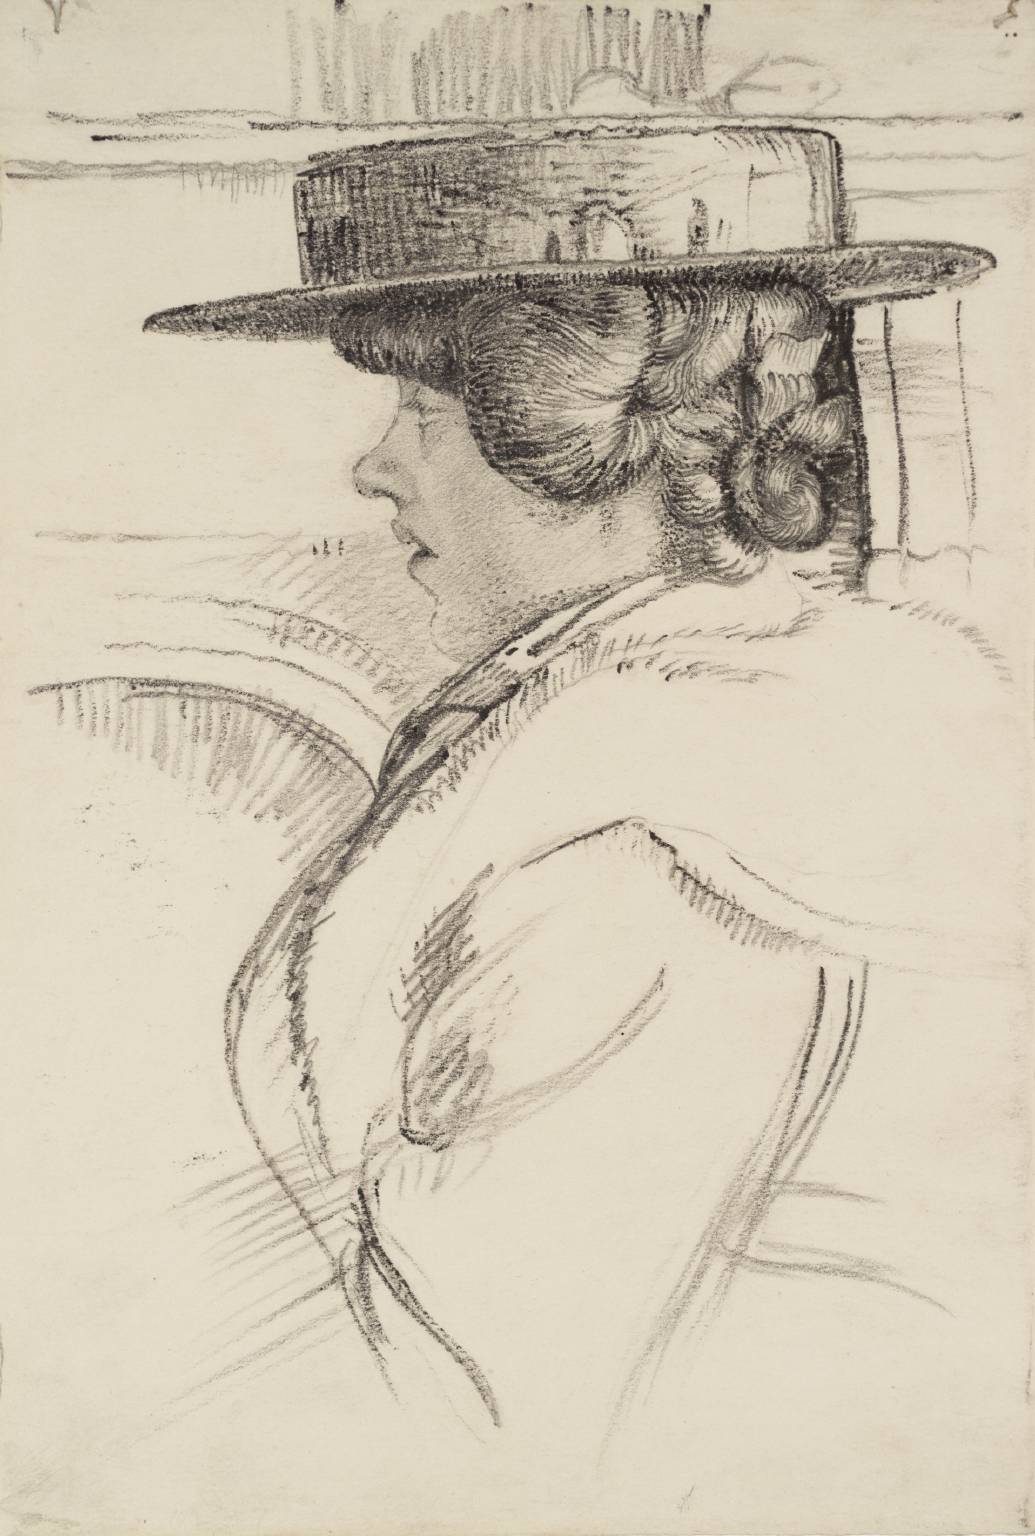 The Straw Hat (1911)